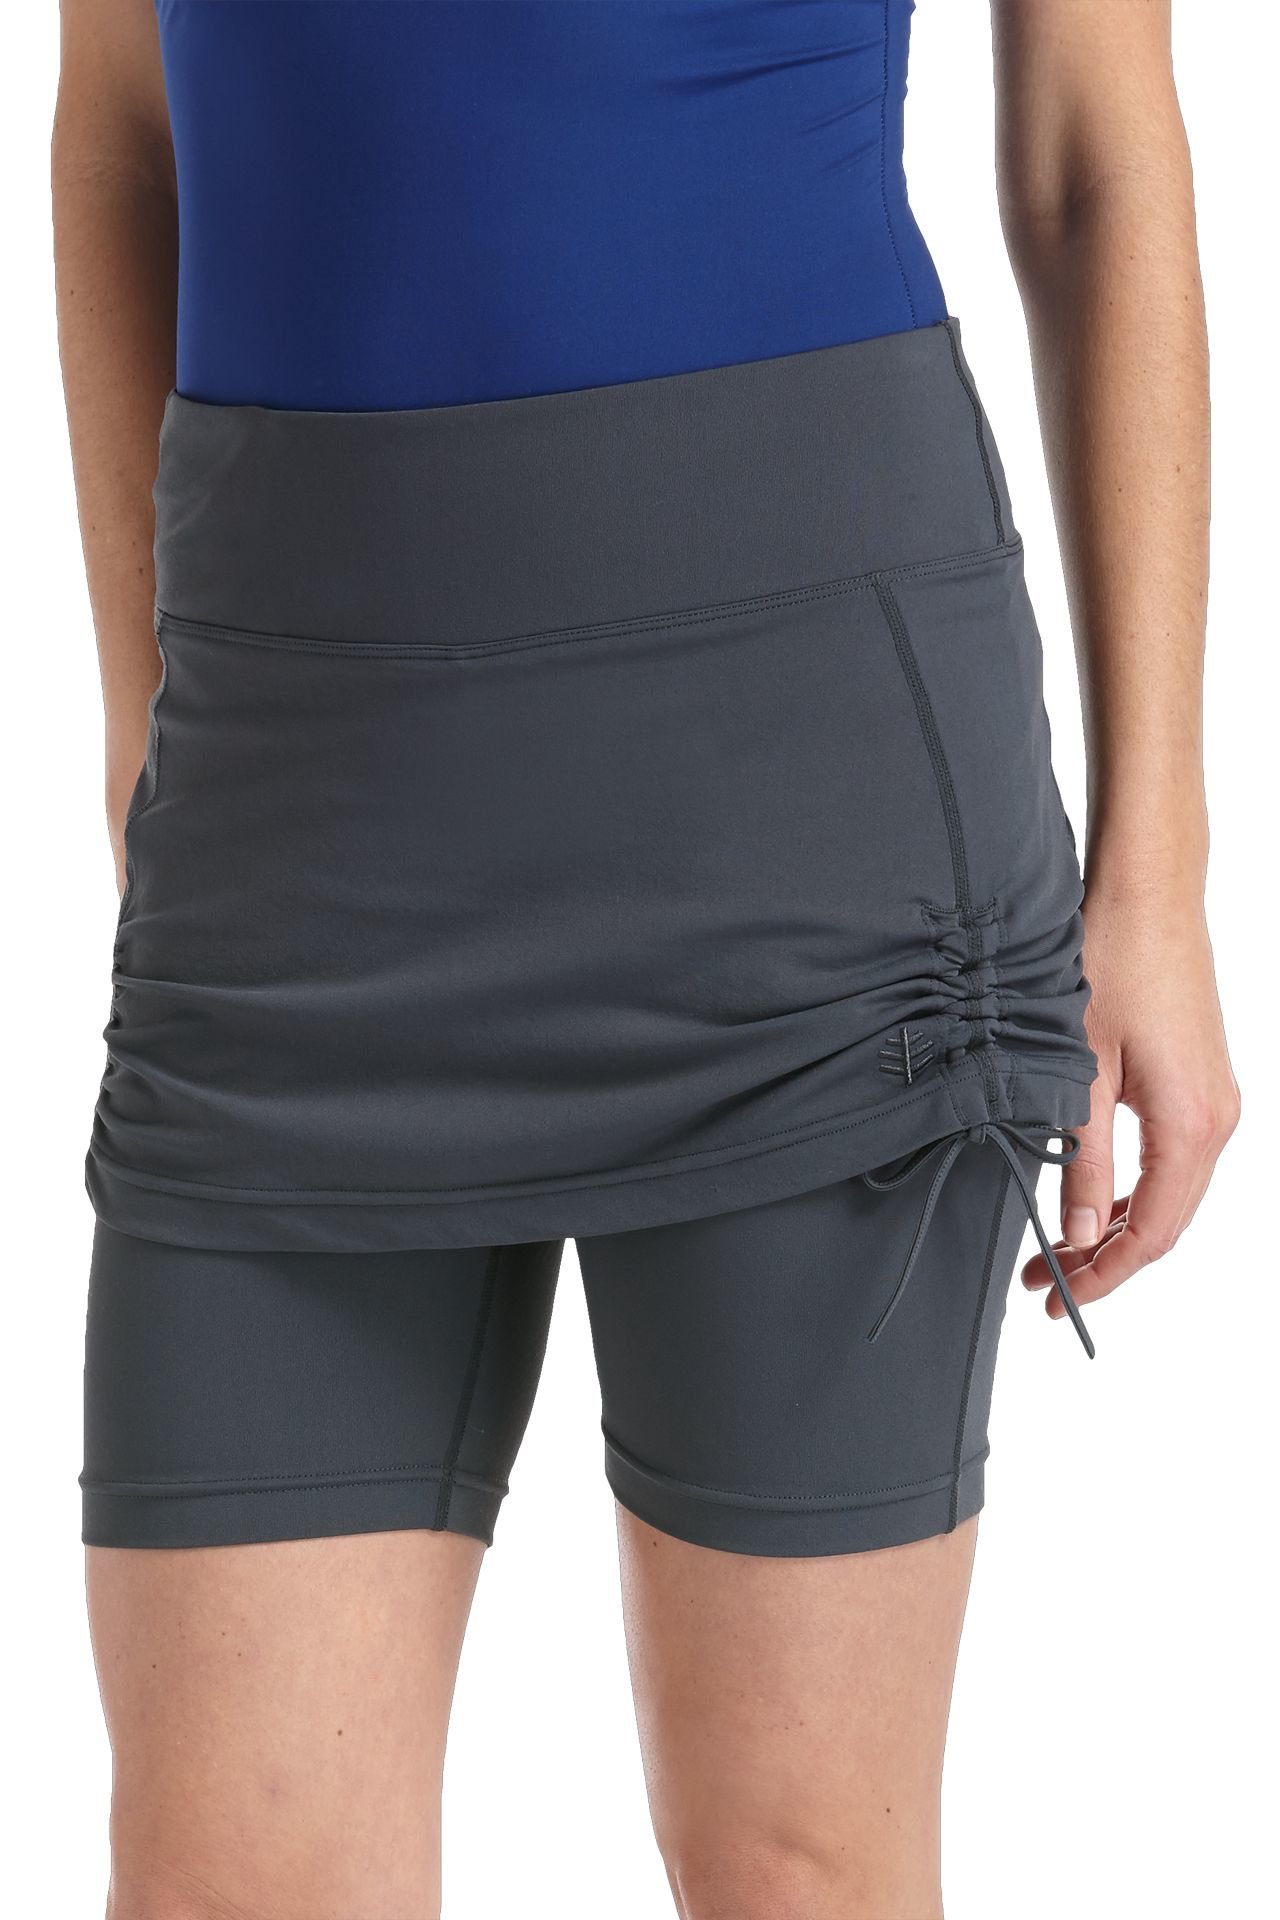 Coolibar - Skirted UV Swim Shorts - Graphite